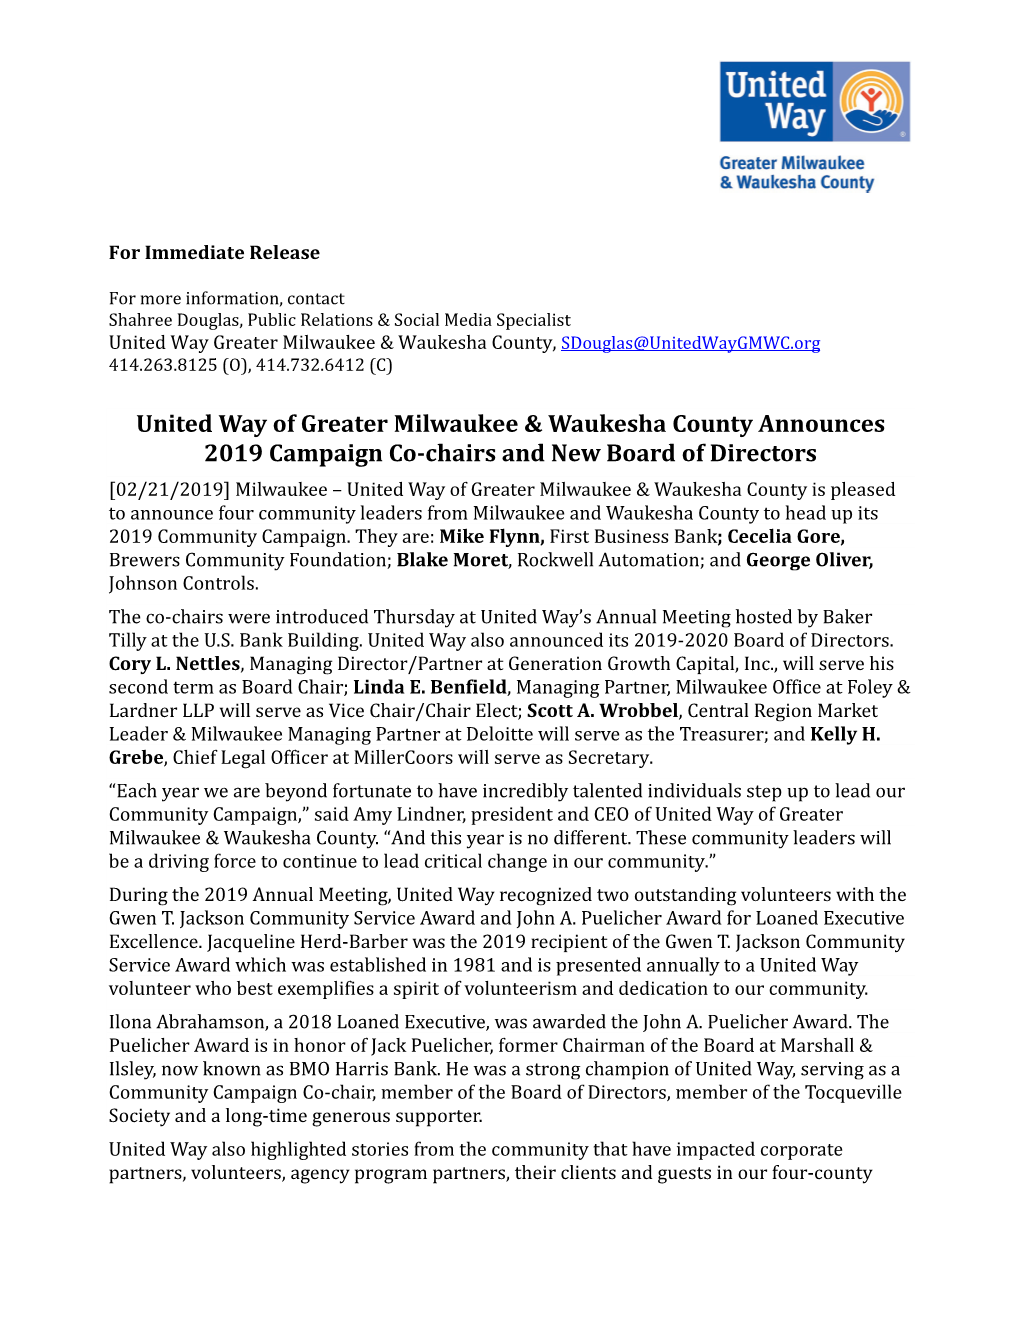 United Way of Greater Milwaukee & Waukesha County Announces